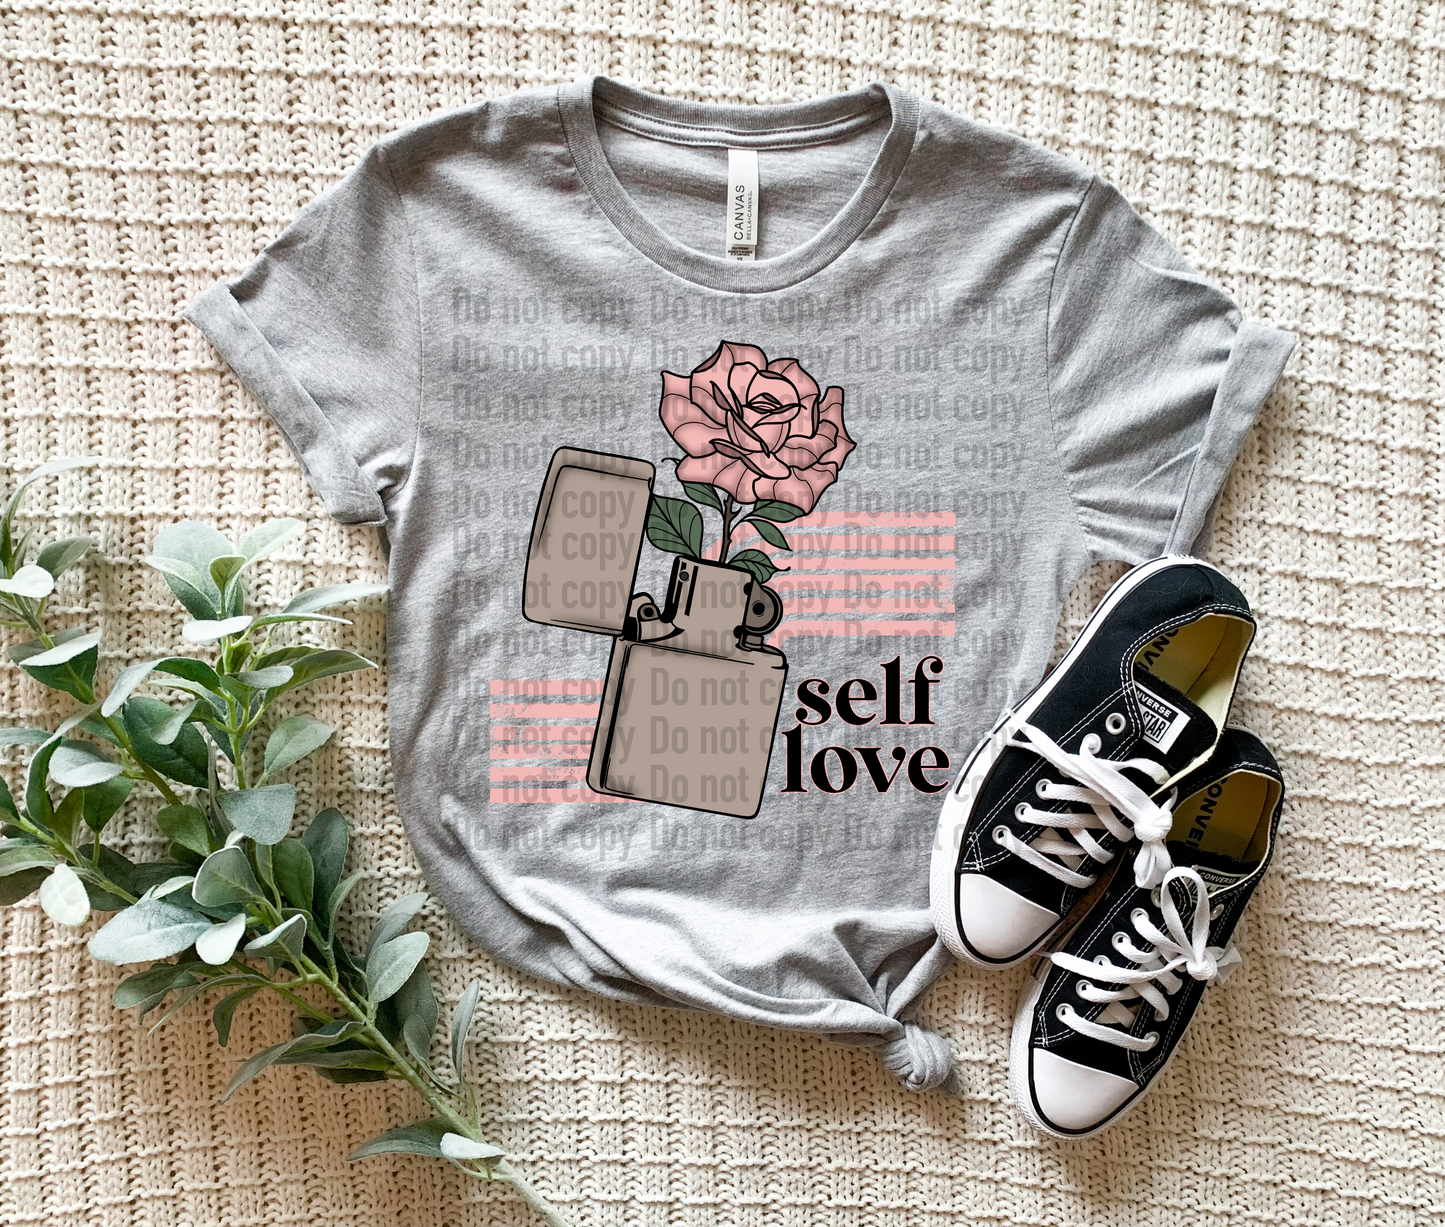 Self Love - T-Shirt & Hoodie